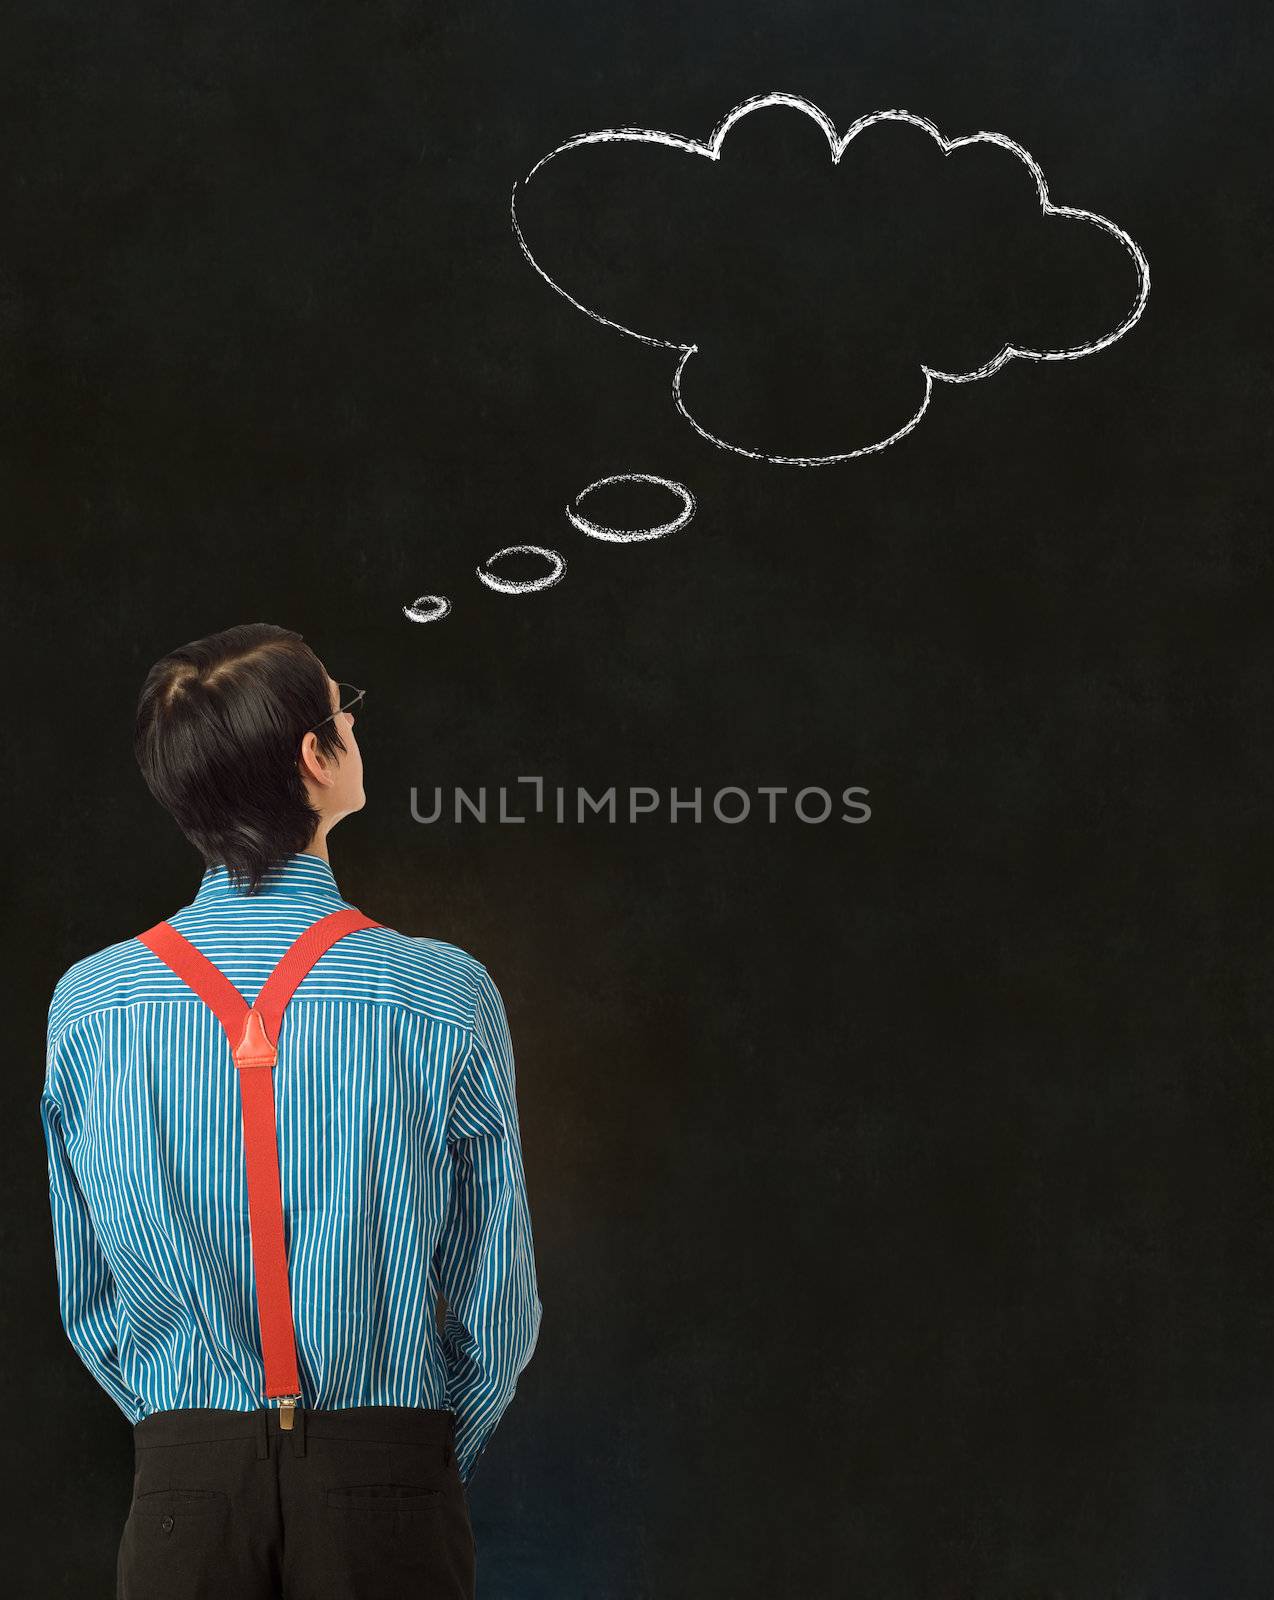 Nerd geek businessman student teacher with thought thinking chalk cloud on blackboard background